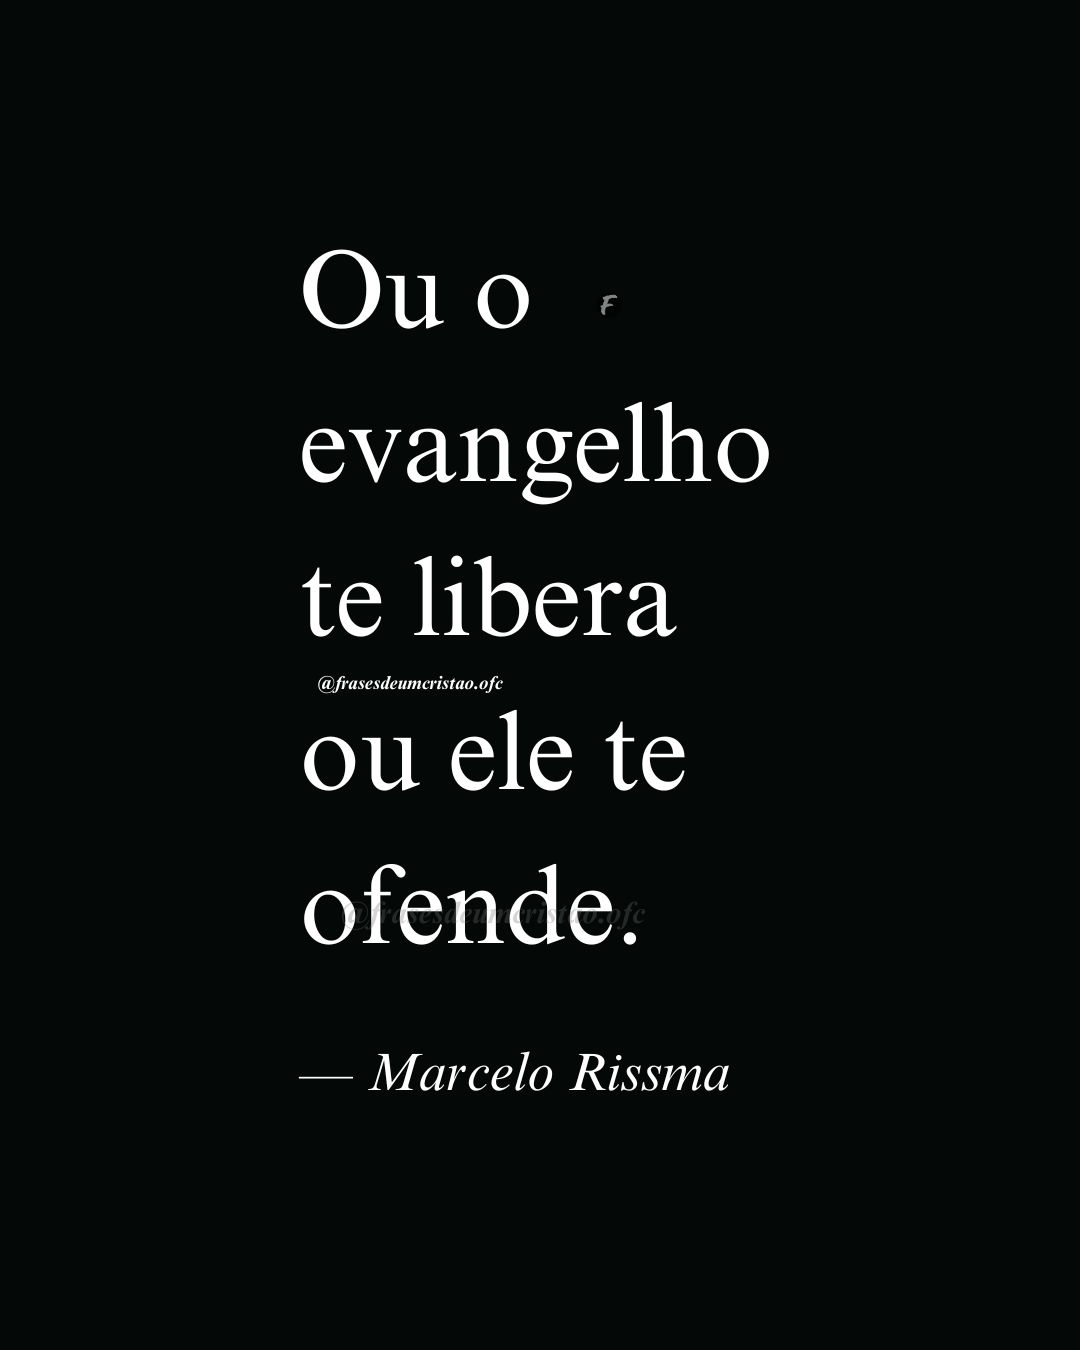 Ou o evangelho te libera ou ele te ofende. — Marcelo Rissma